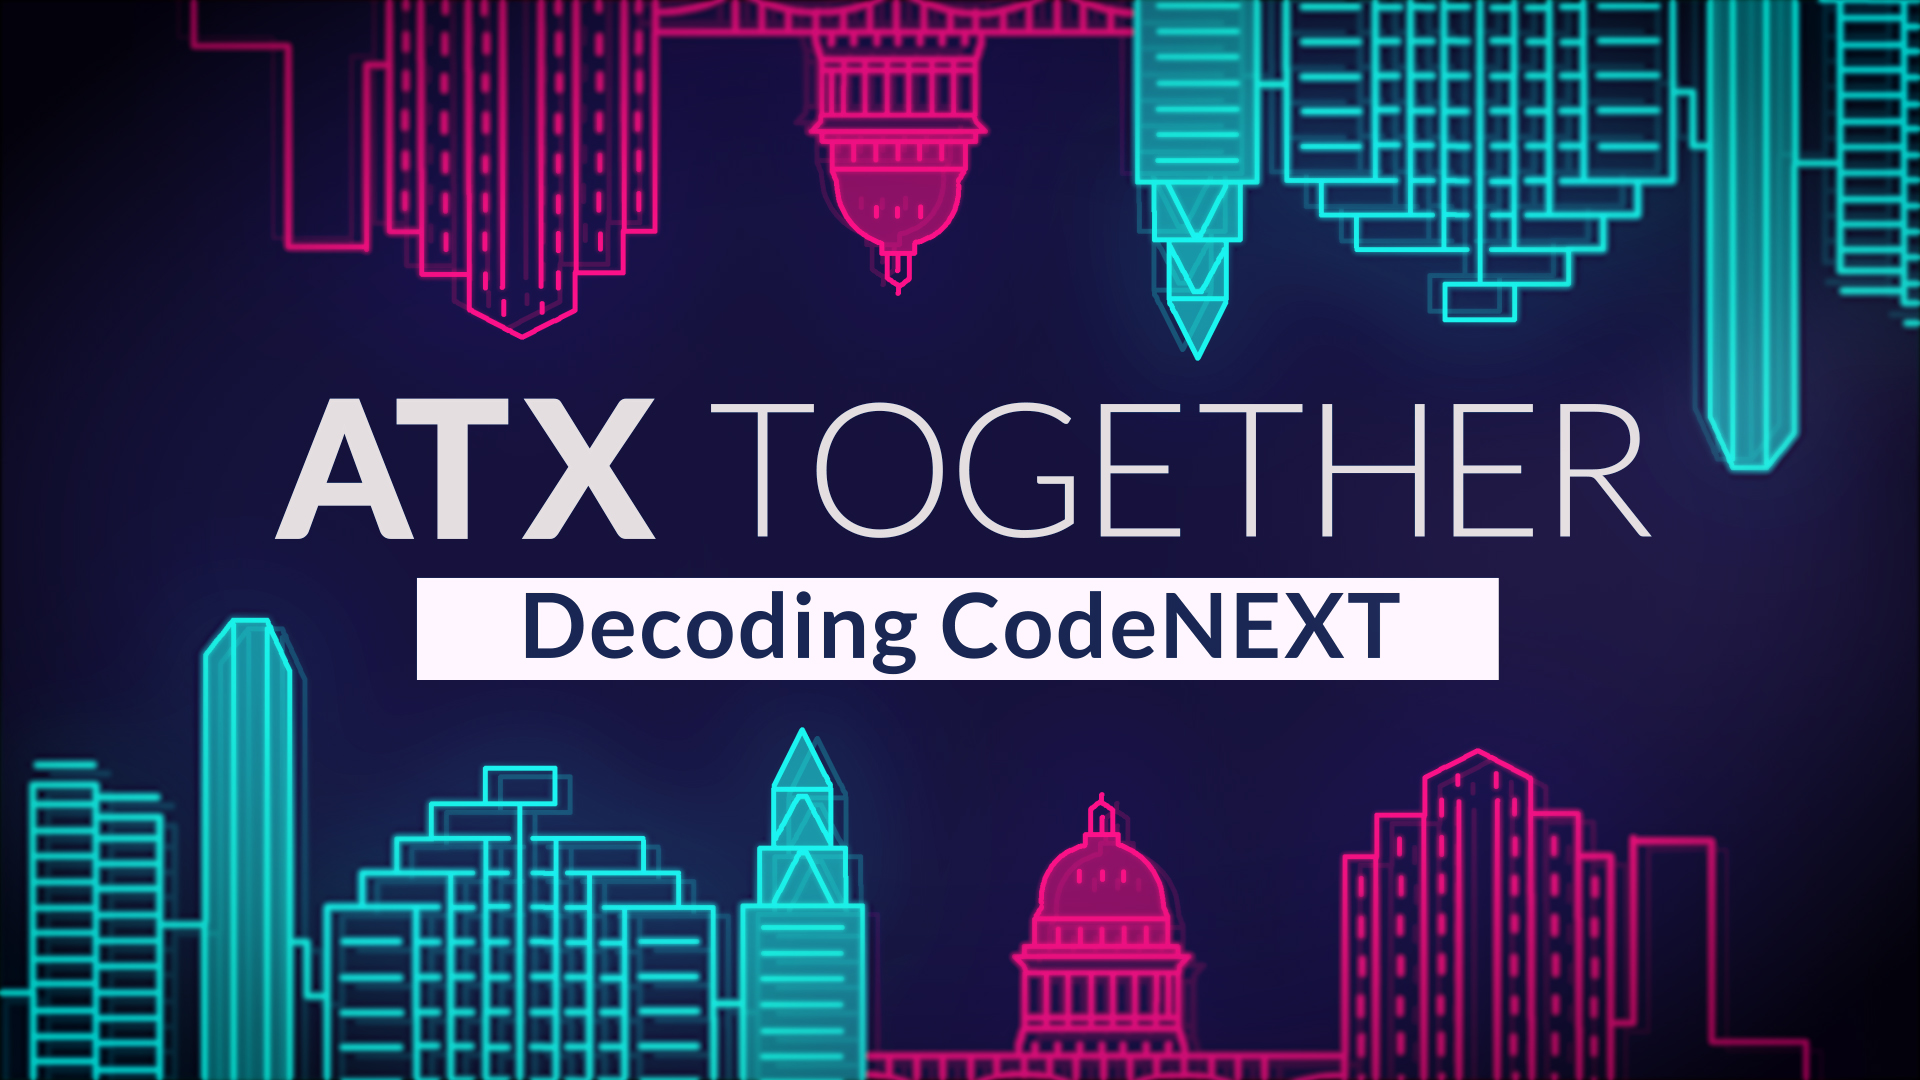 ATX TOGETHER Decoding CodeNEXT